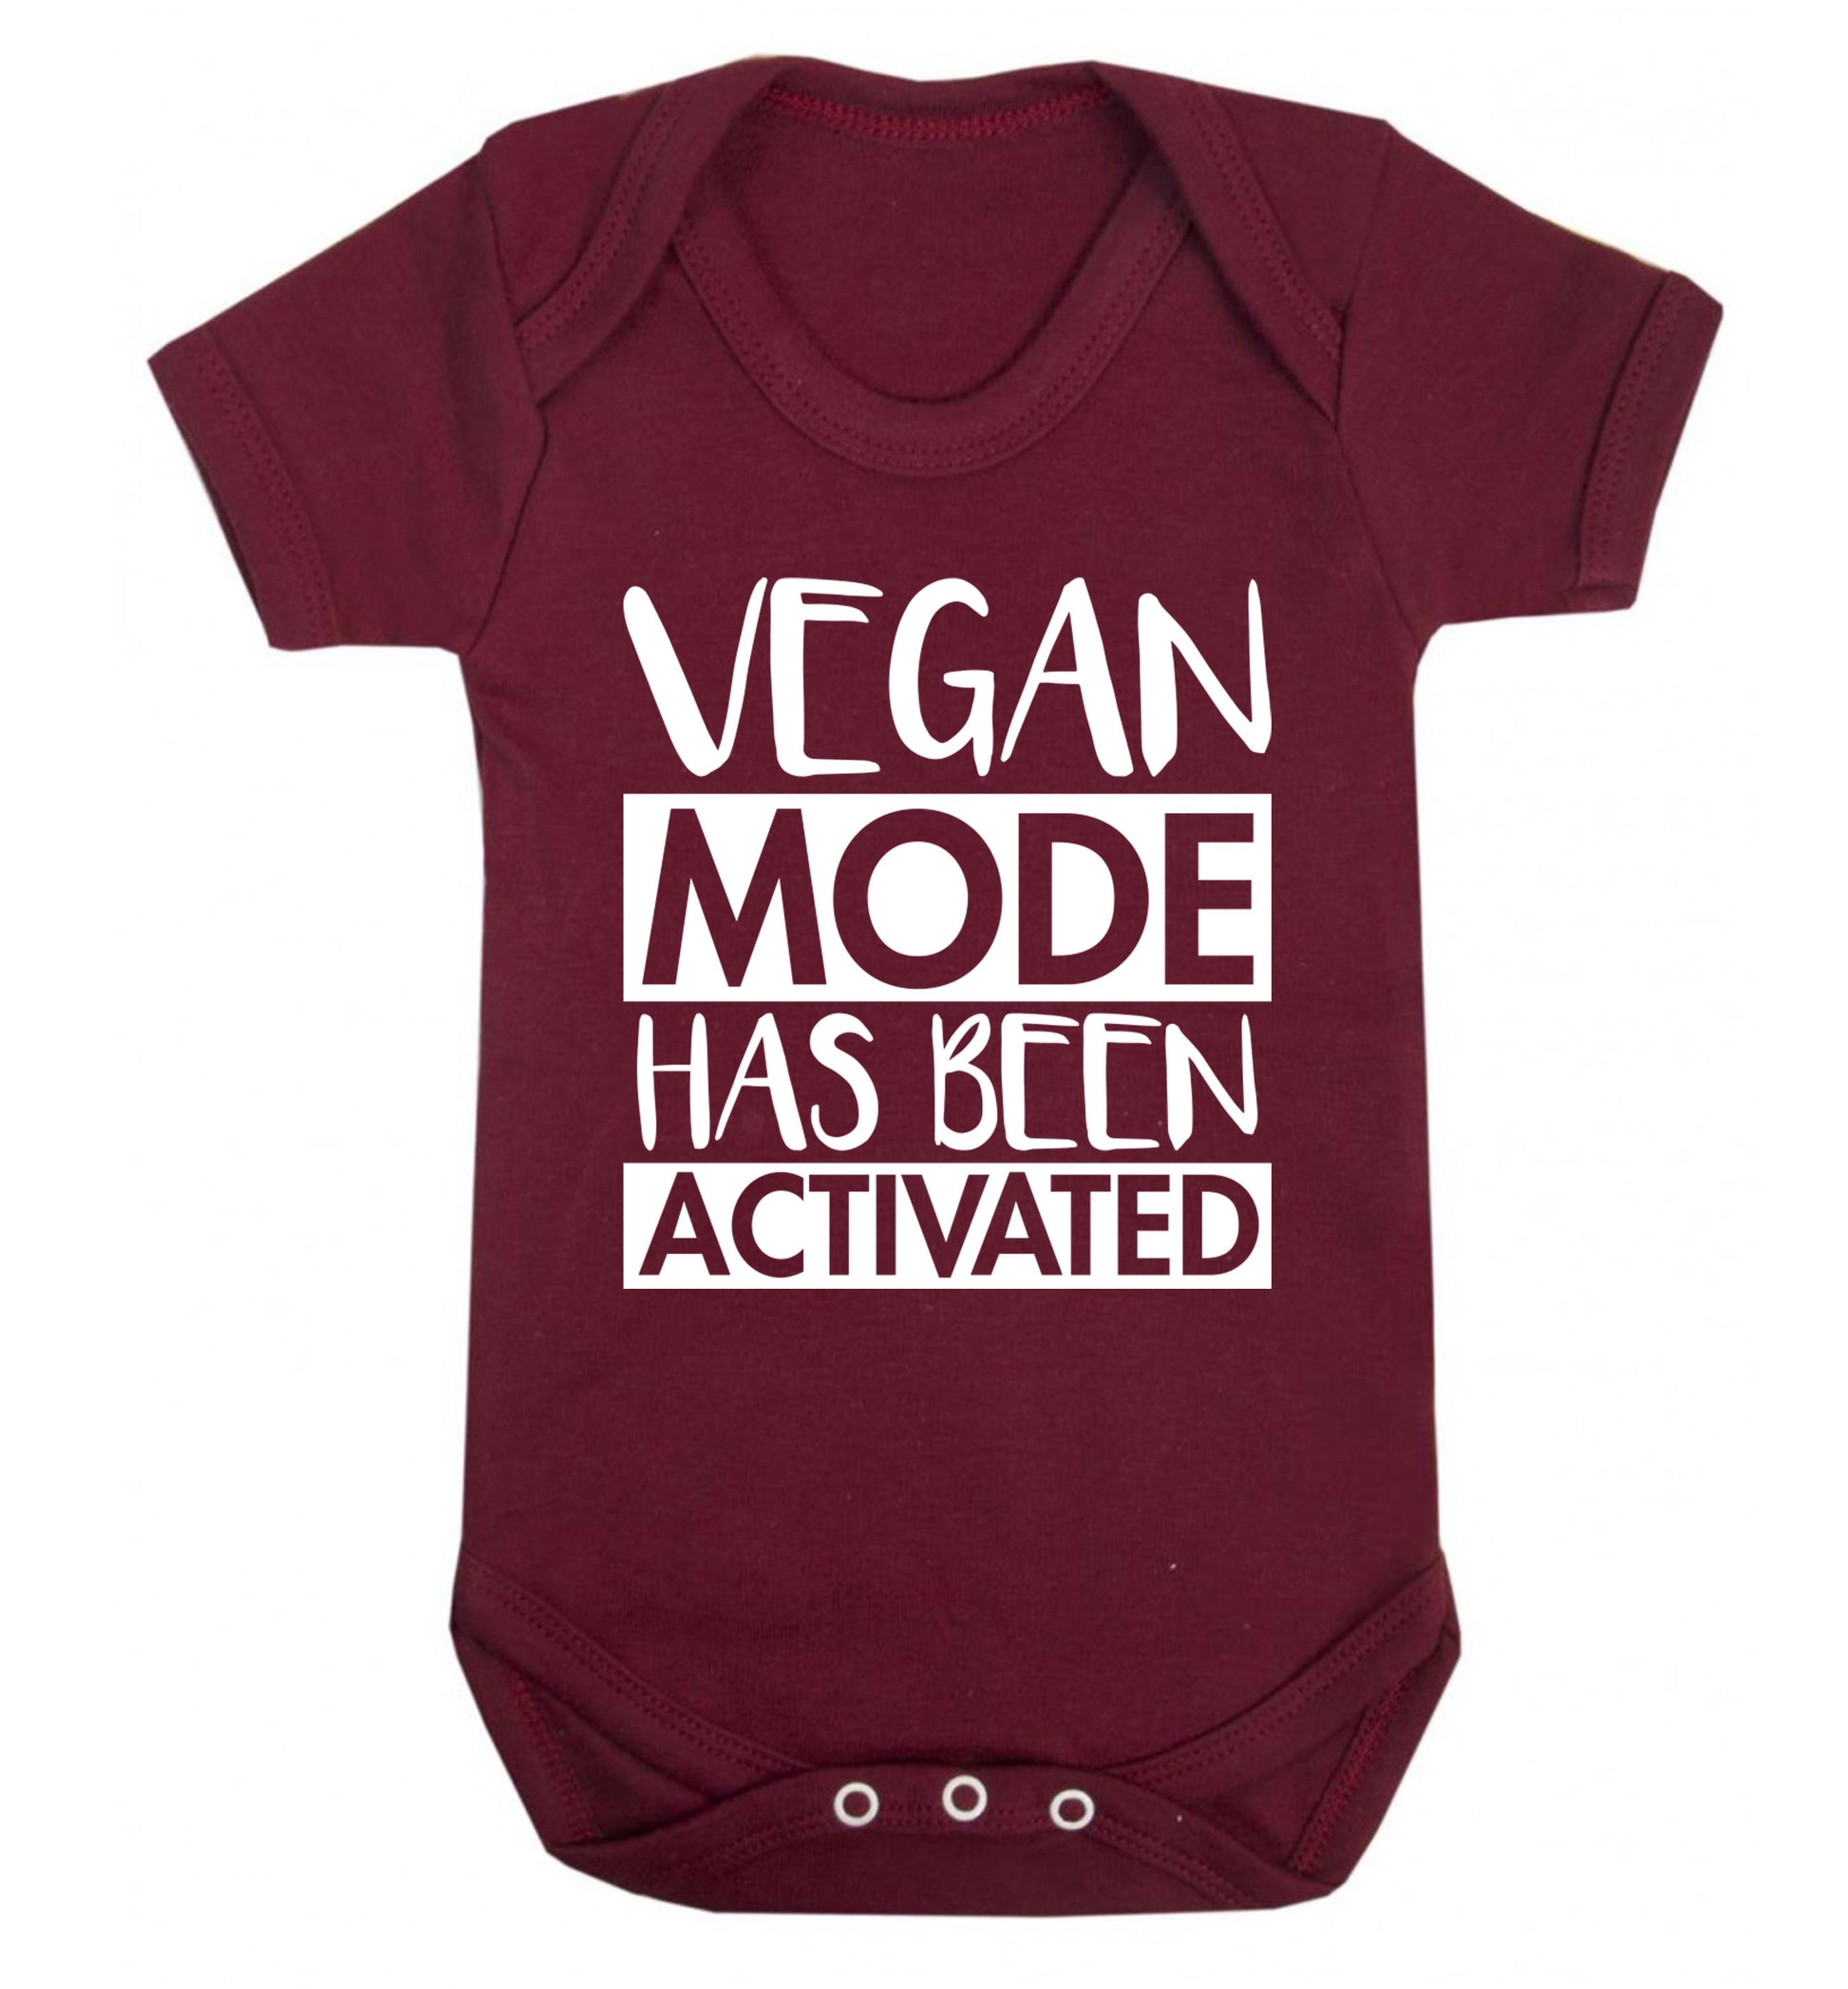 Vegan mode activated Baby Vest maroon 18-24 months